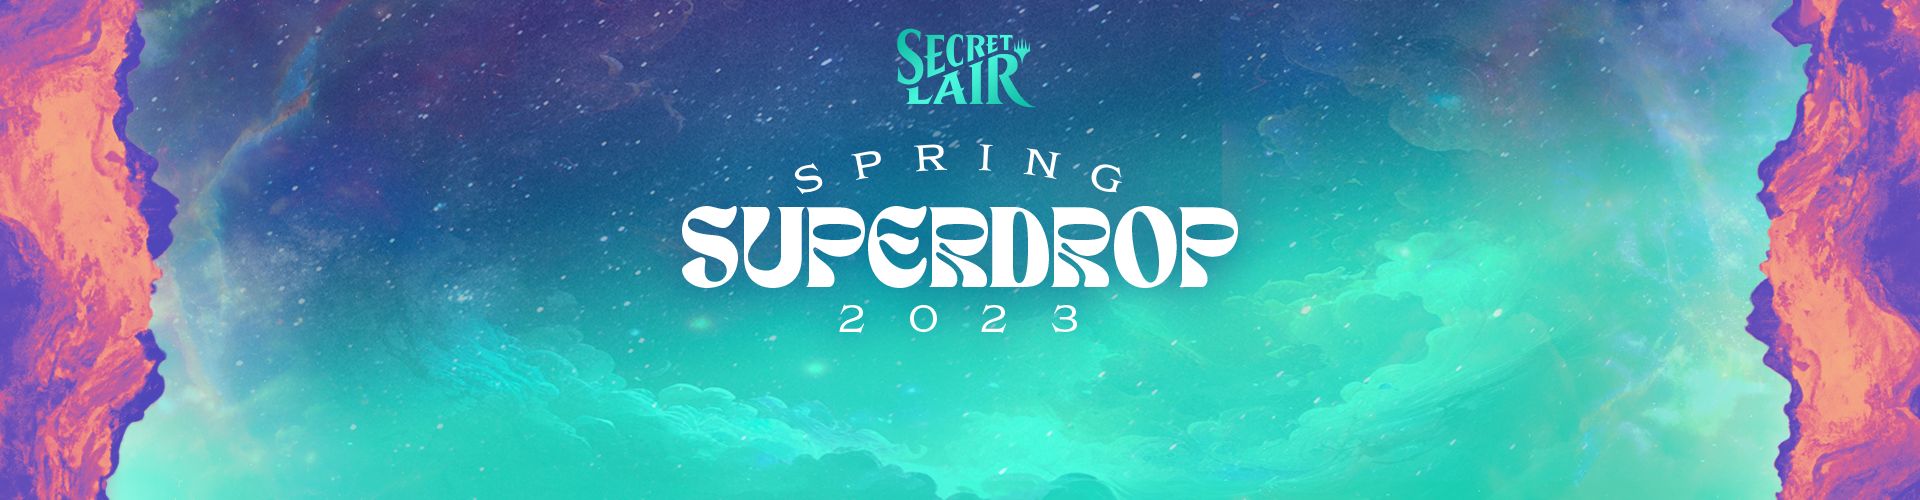 Spring Superdrop 2023 Secret Lair store